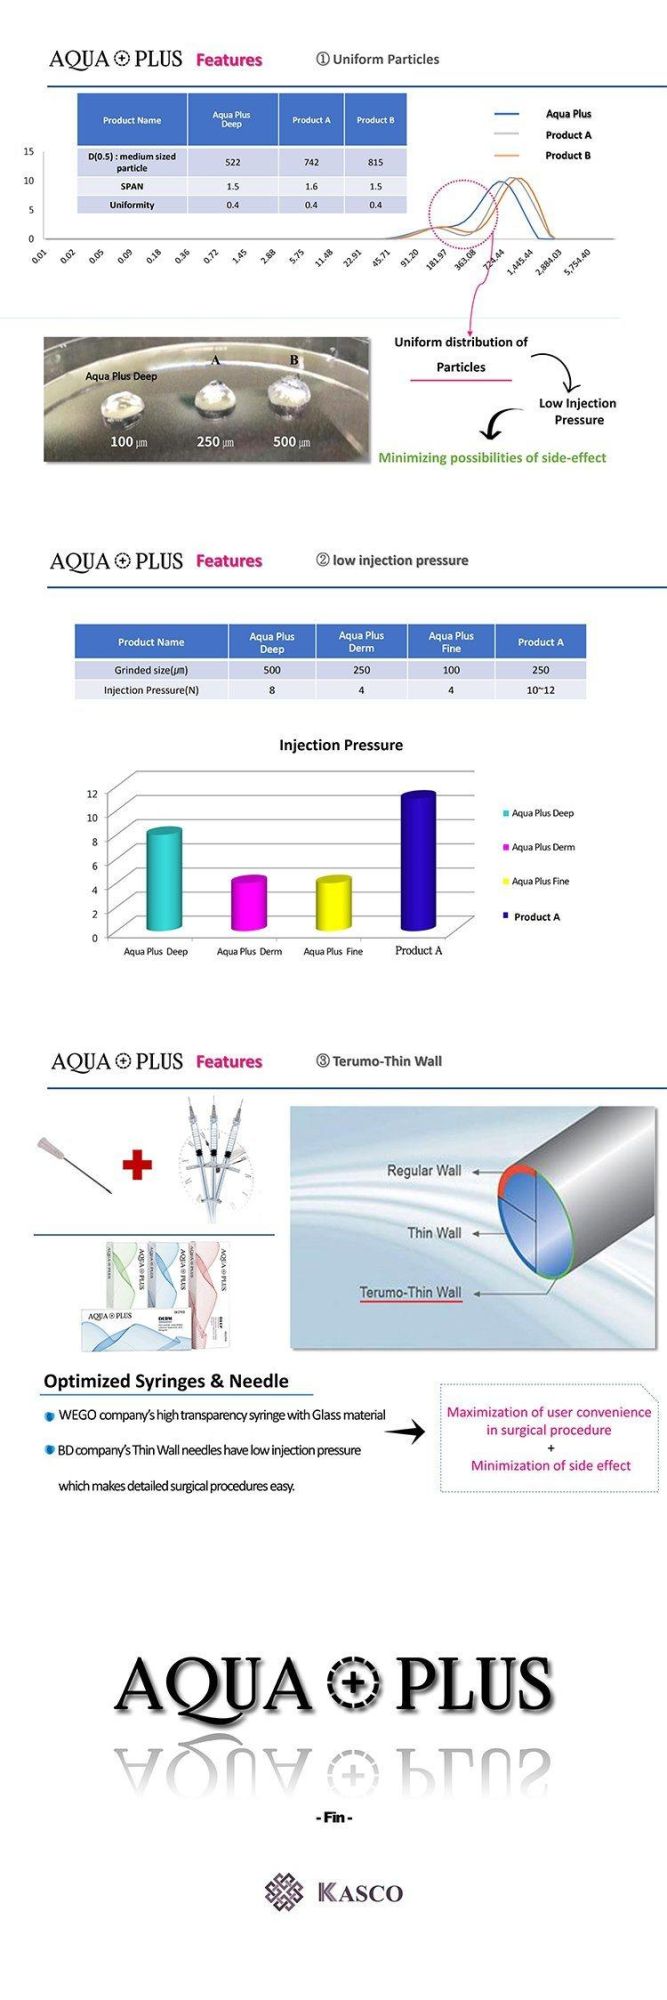 Aqua Plus Top Quality Ha Hyaluronic Acid 2ml Dermal Filler Gel Injection